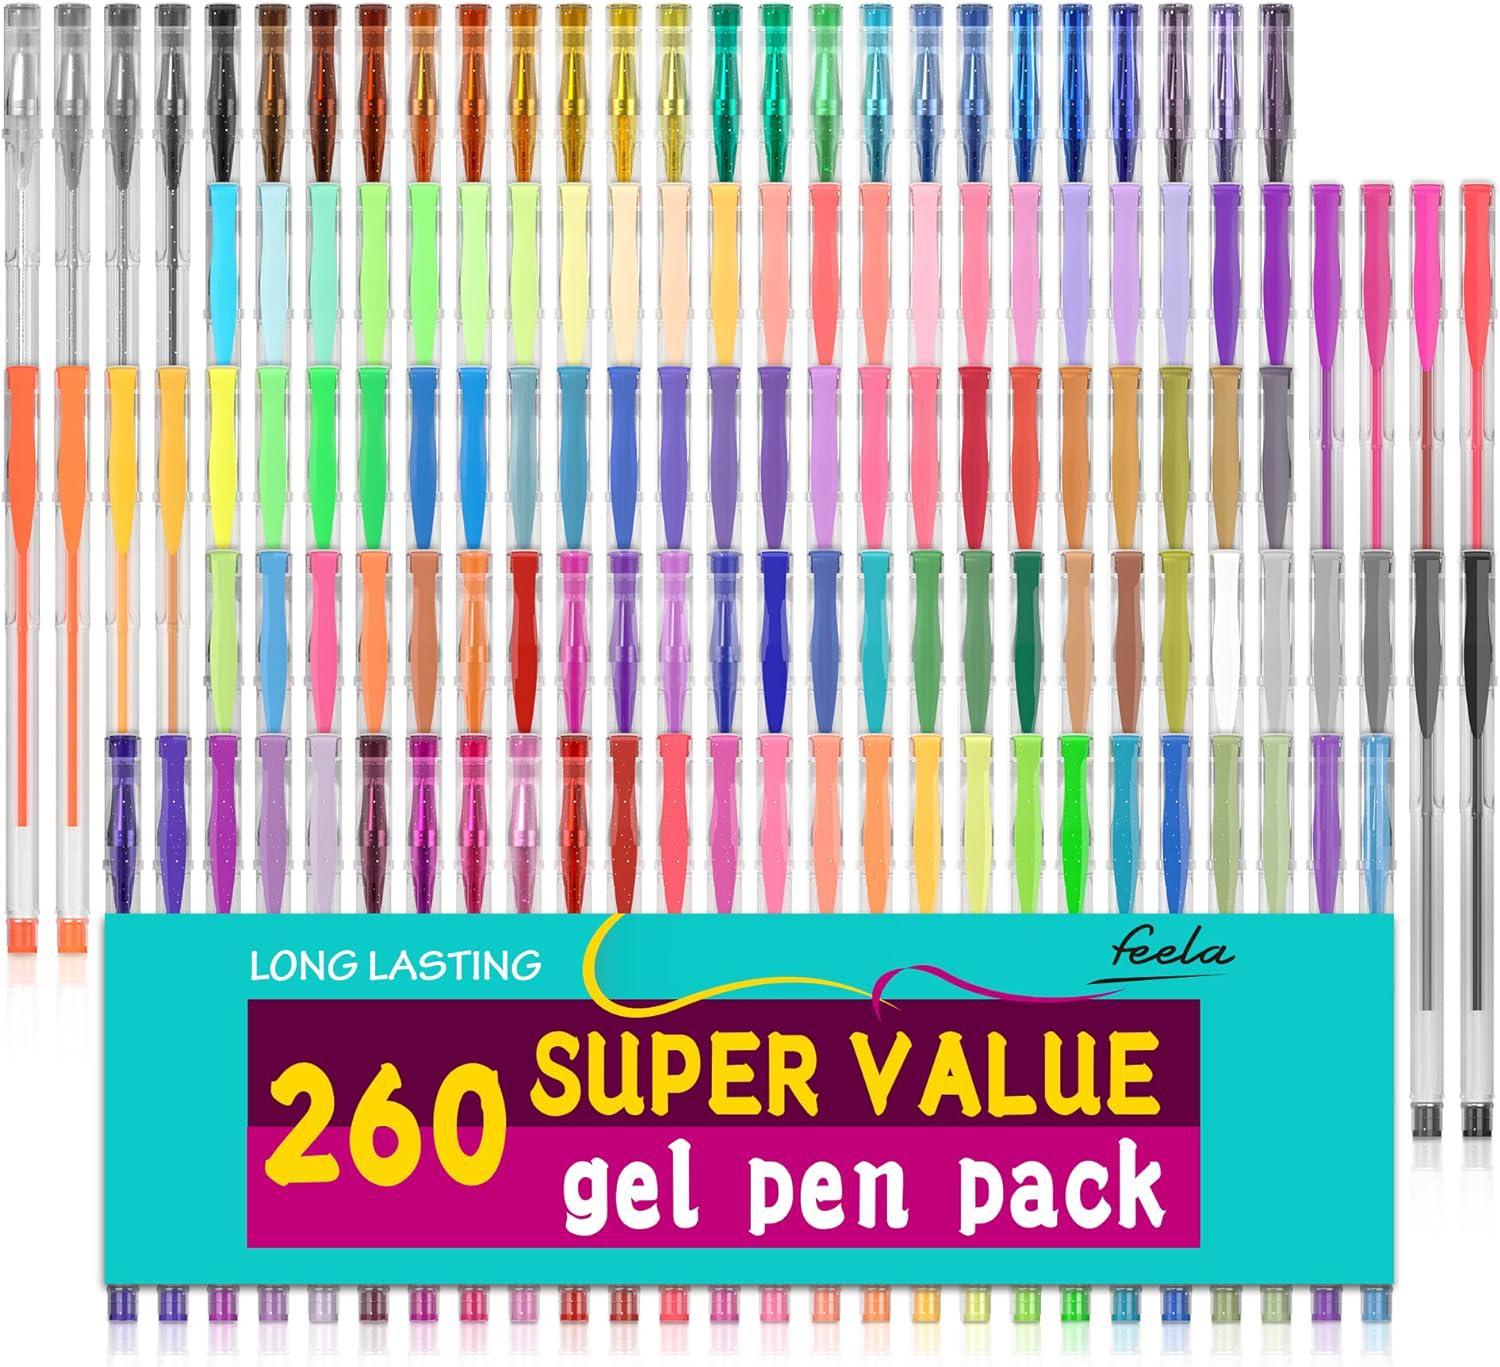 ZSCM 200 Colors Gel Pens Set, Glitter Gel Pens Colored Drawing